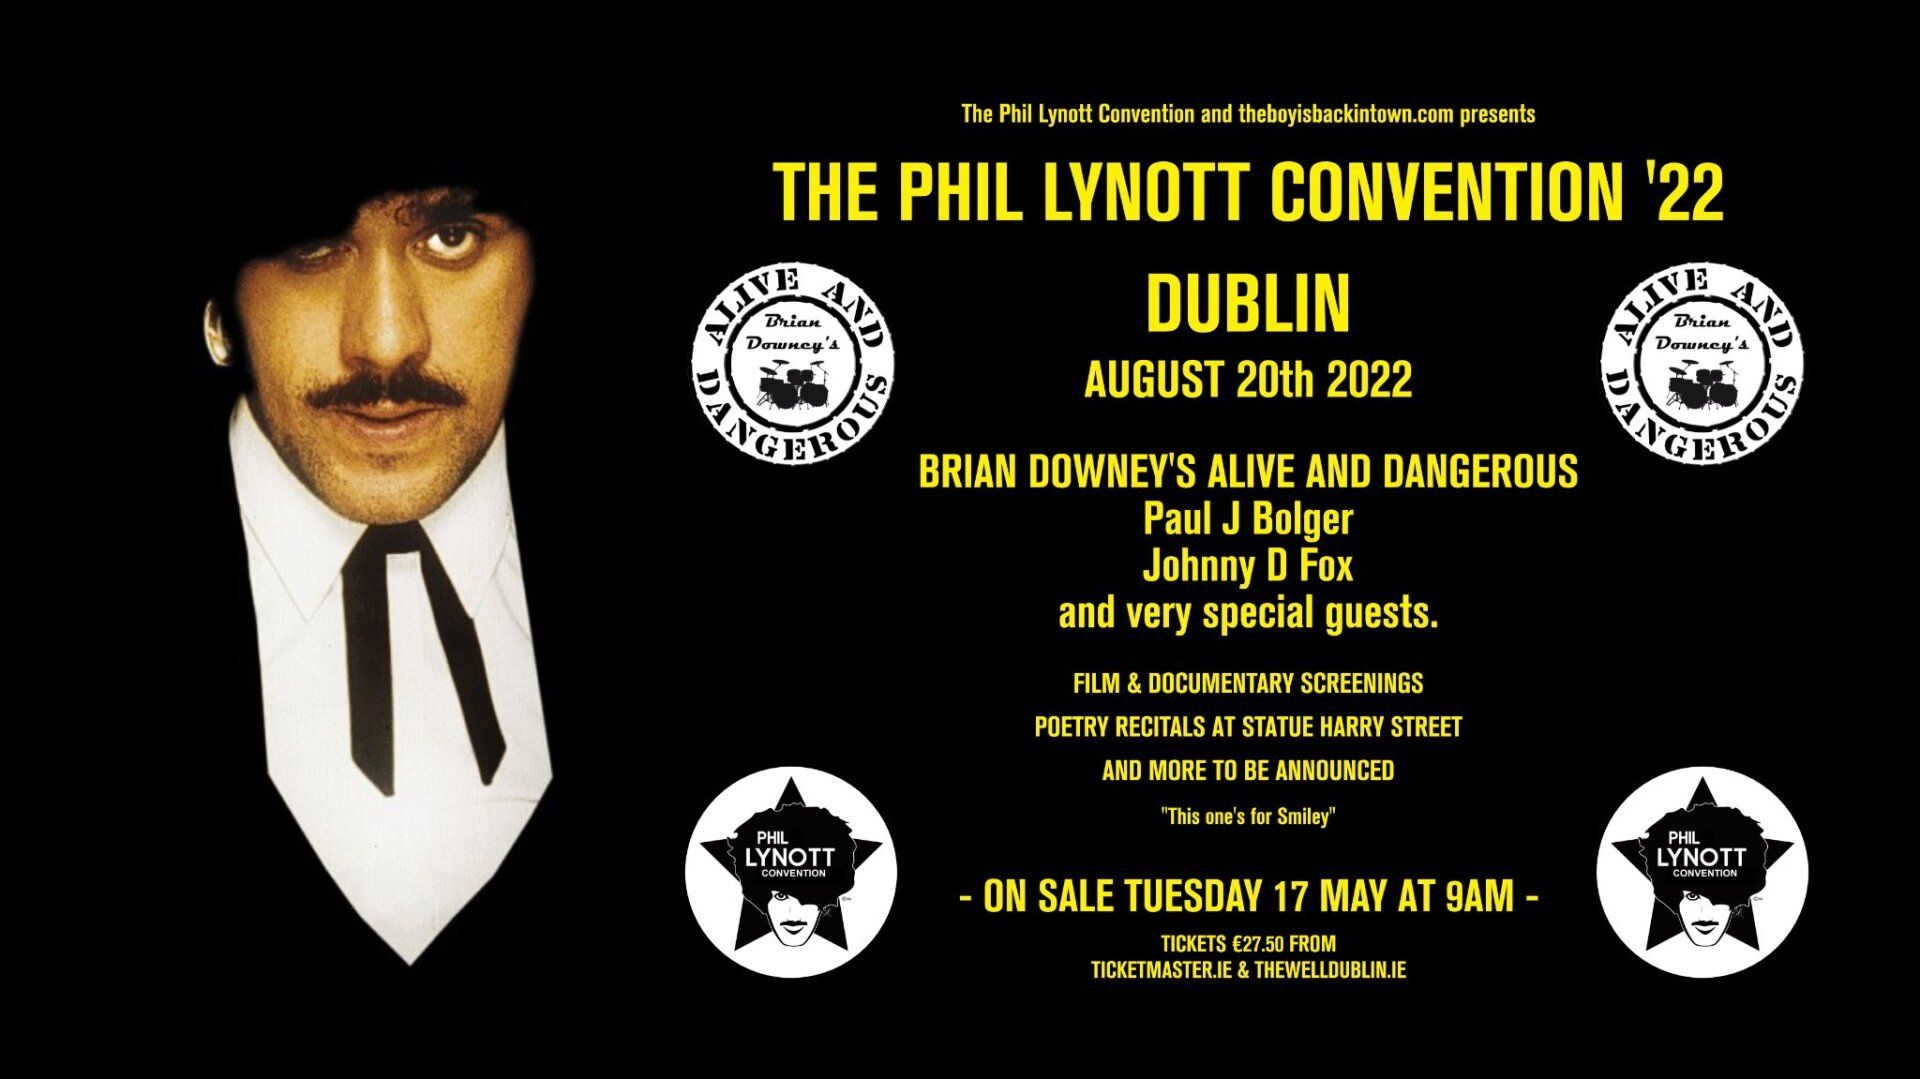 The Phil Lynott Convention ‘22 Dublin  August 20th 2022